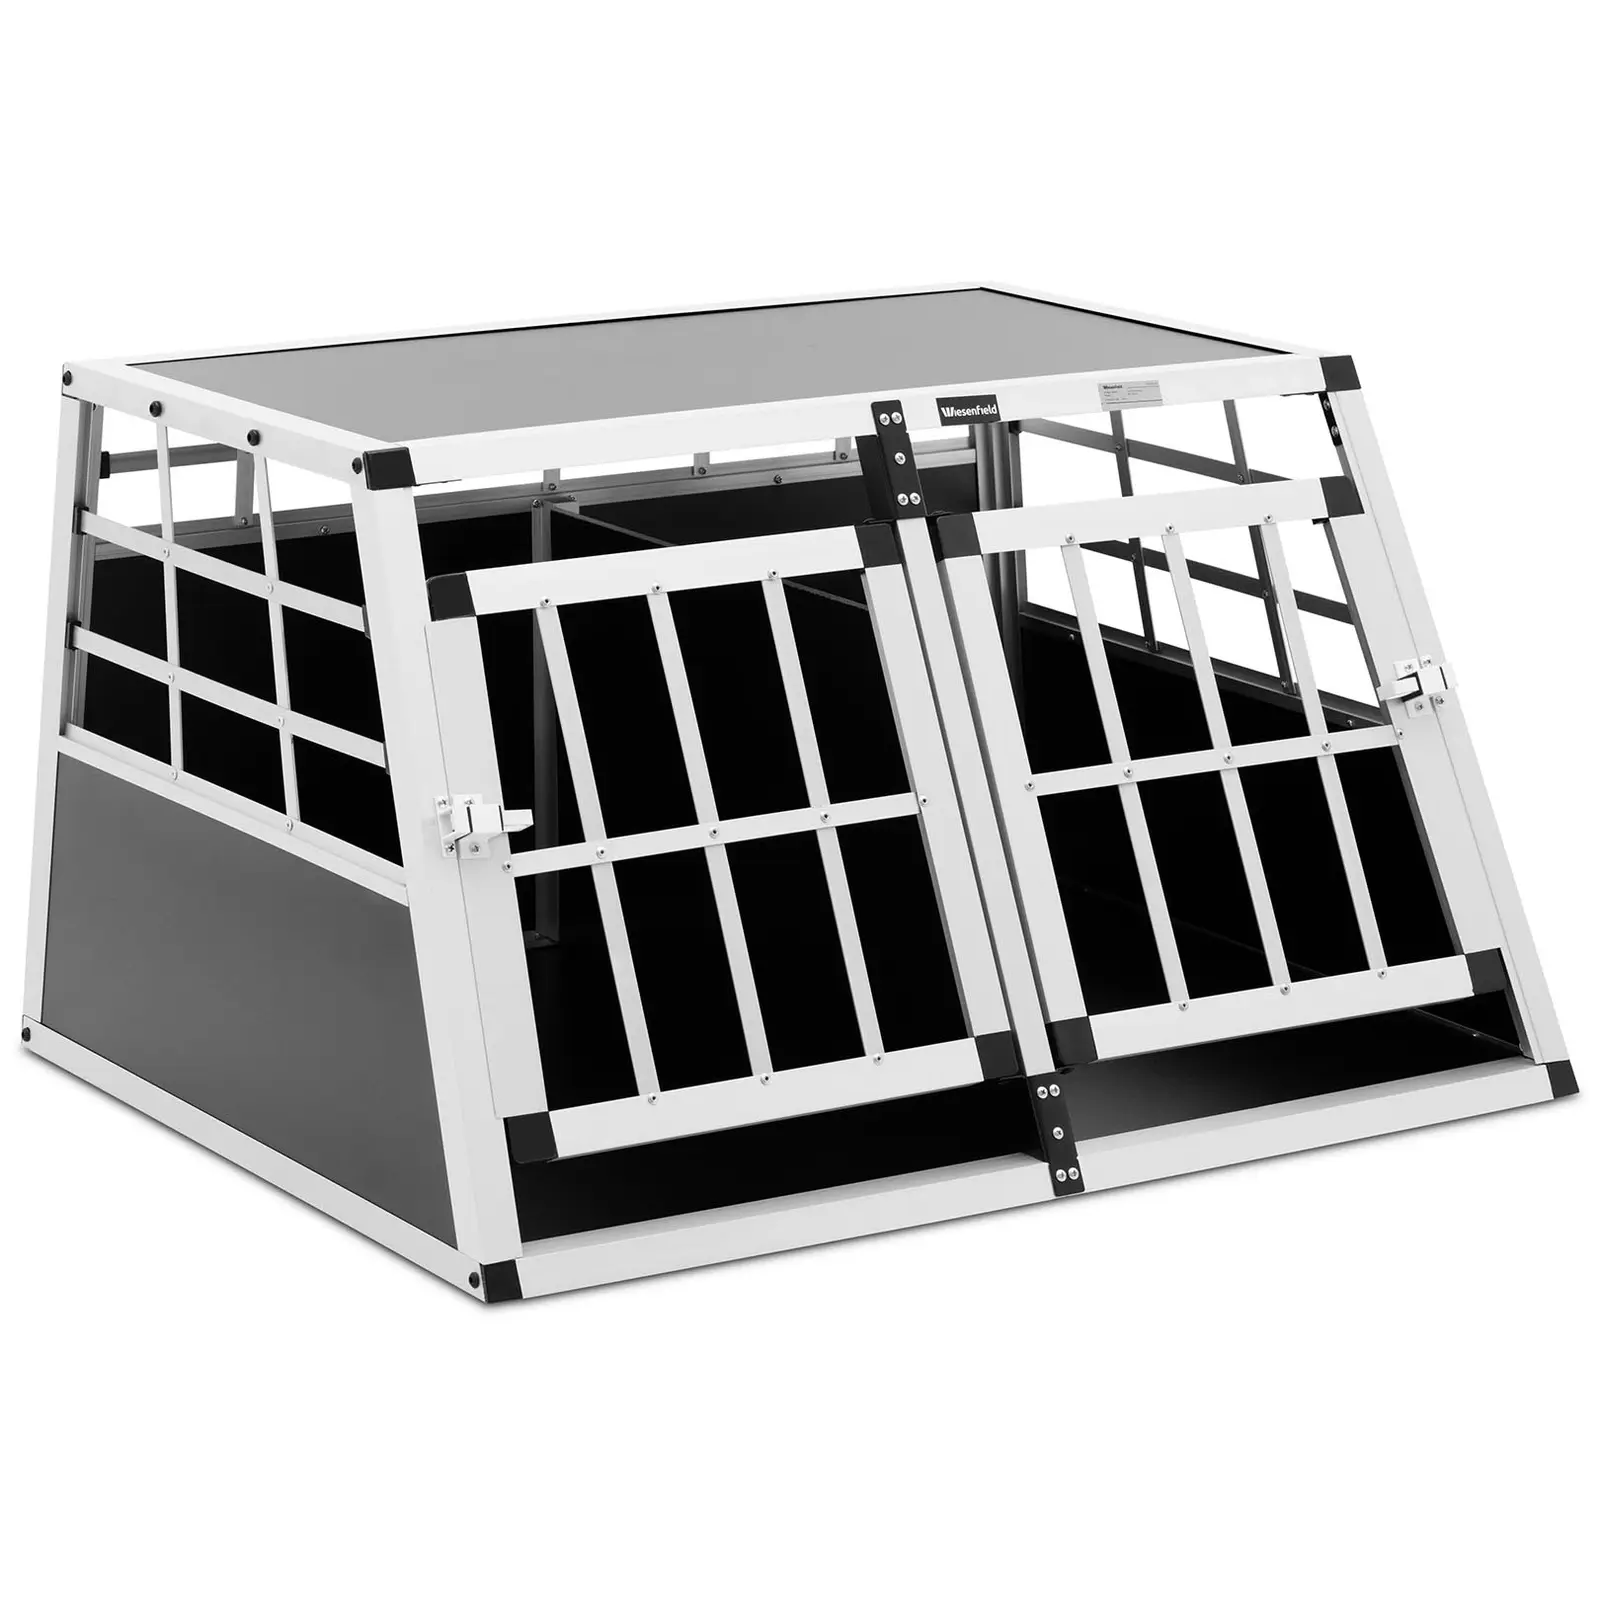 Hundetransportbox - Aluminium - Trapezform - 70 x 90 x 50 cm - mit Trenner